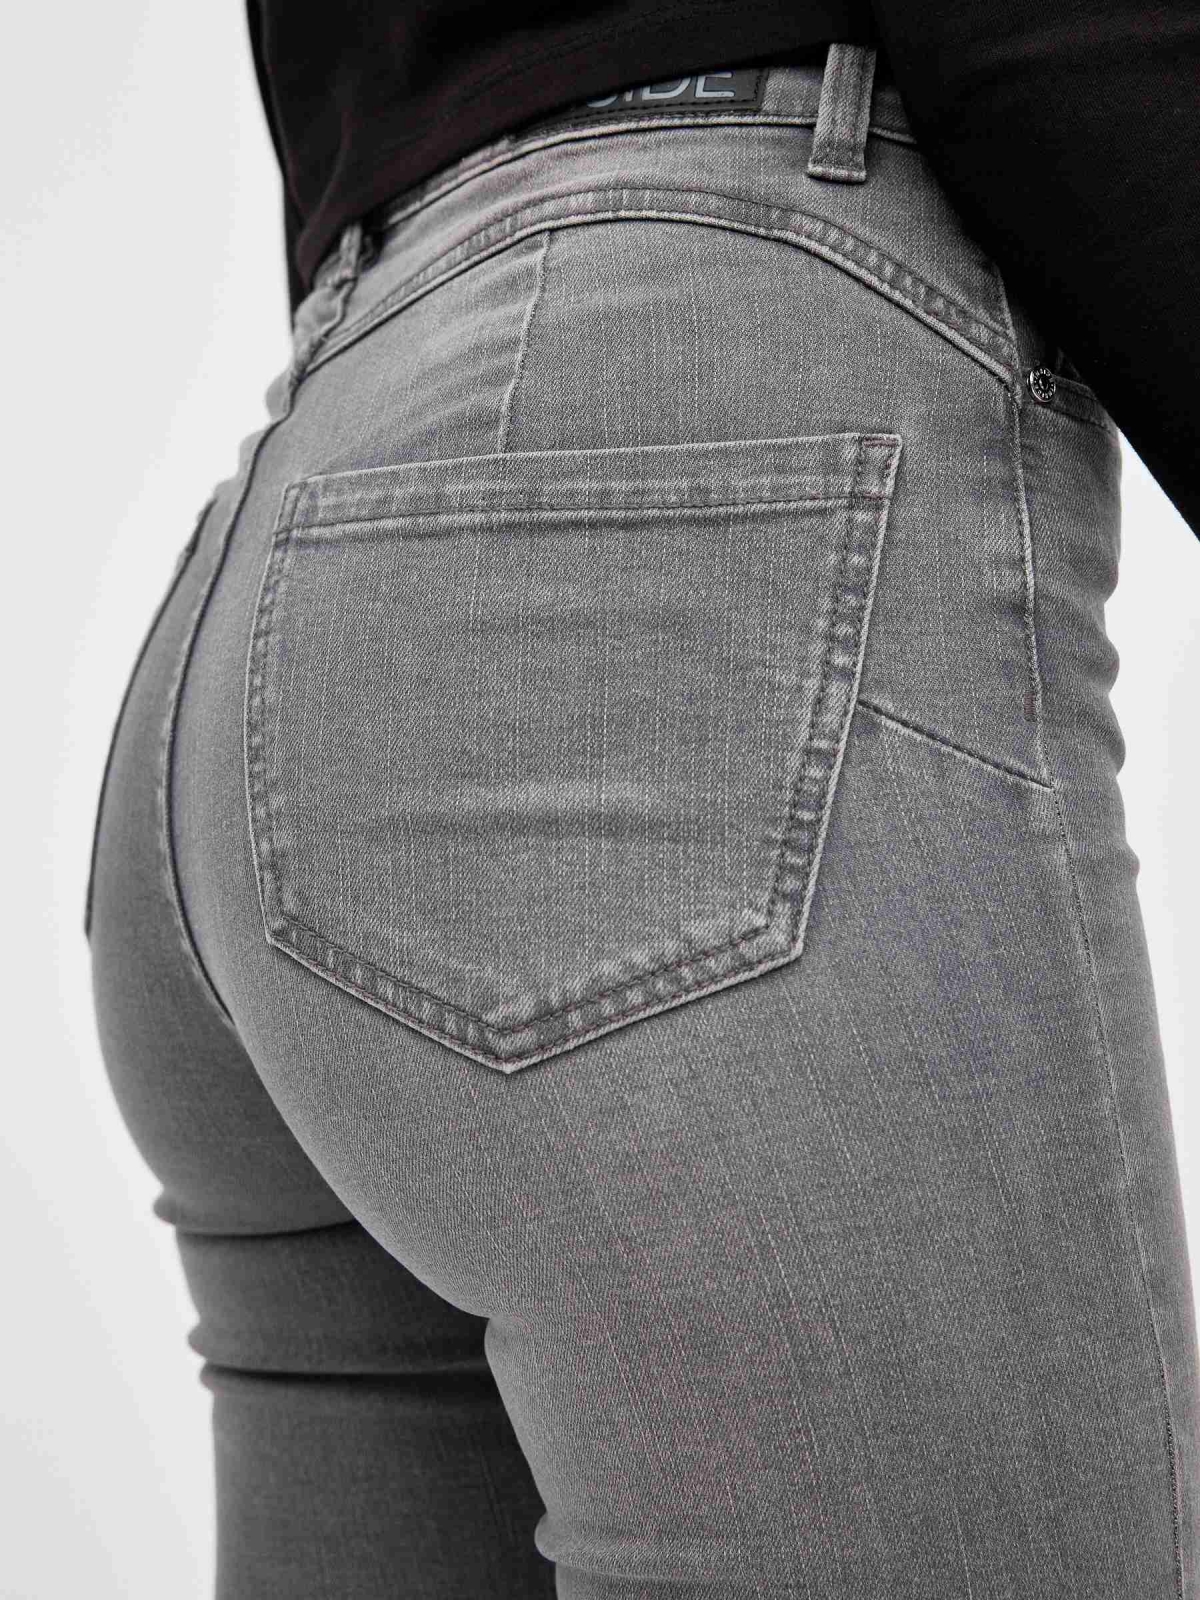 Skinny push up jeans medium rise medium grey detail view